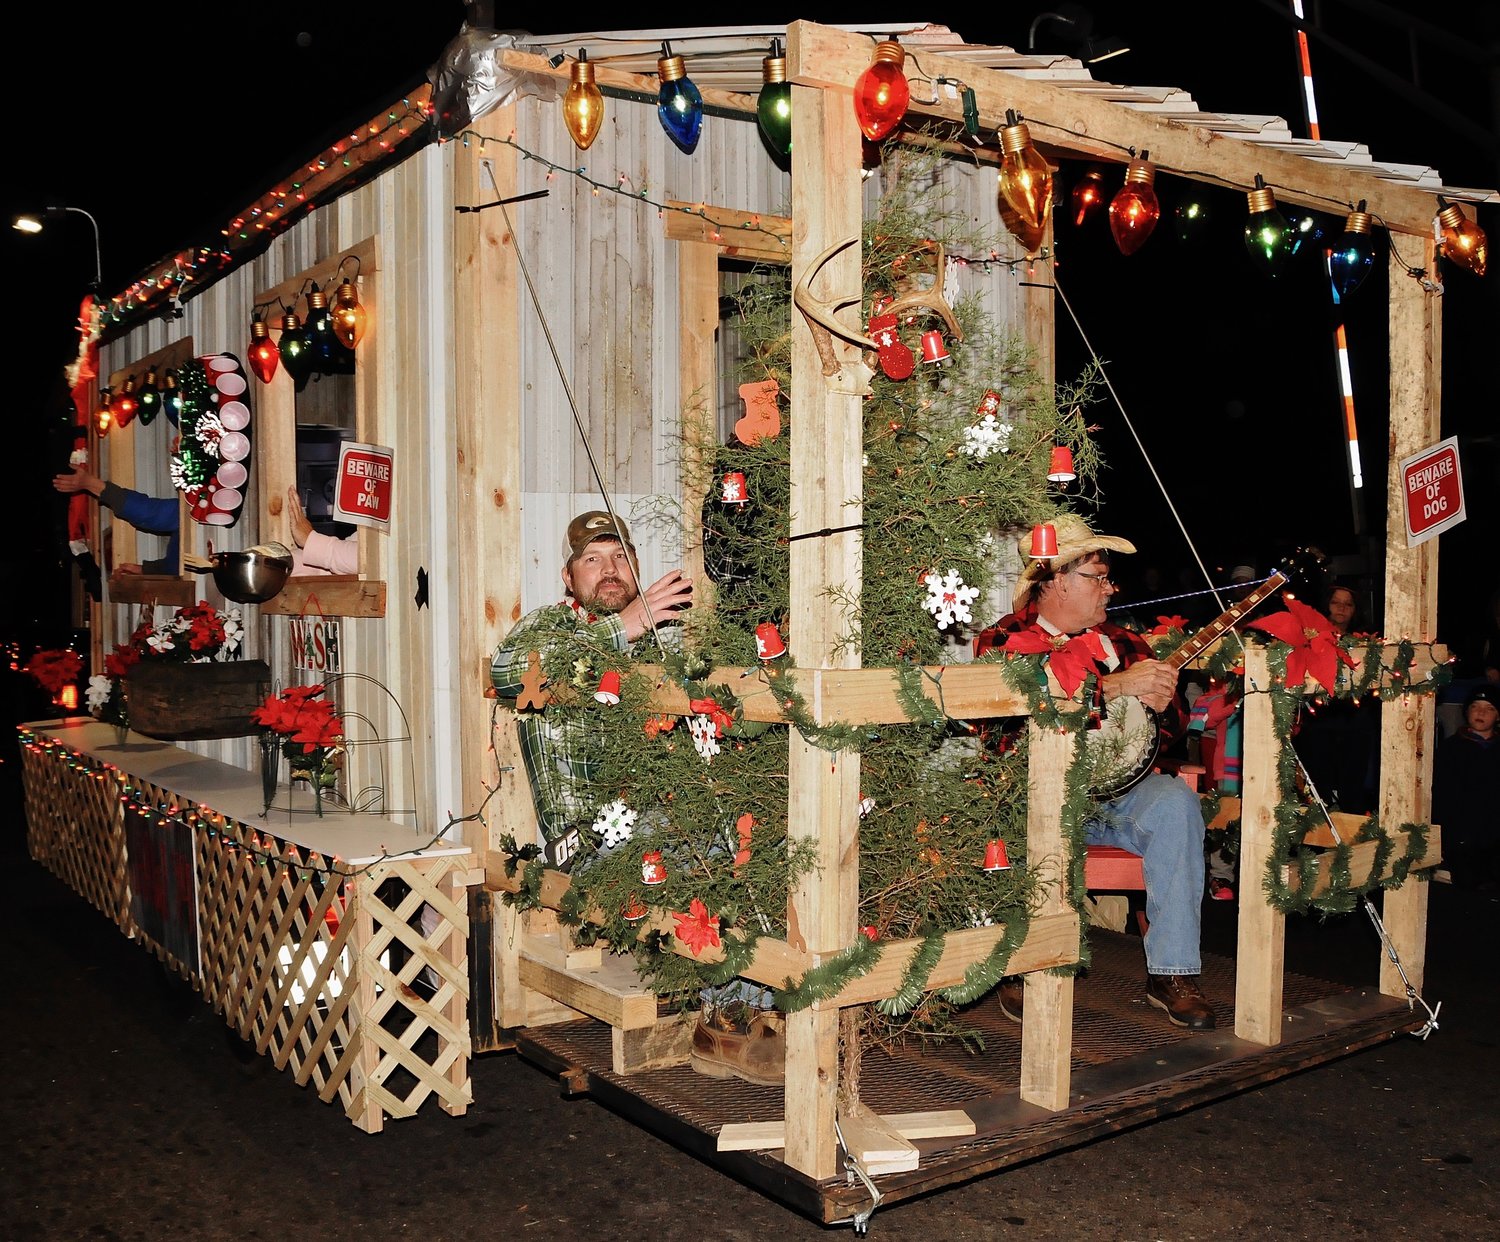 Downtown Cartersville kicks off Christmas season Thursday The Daily